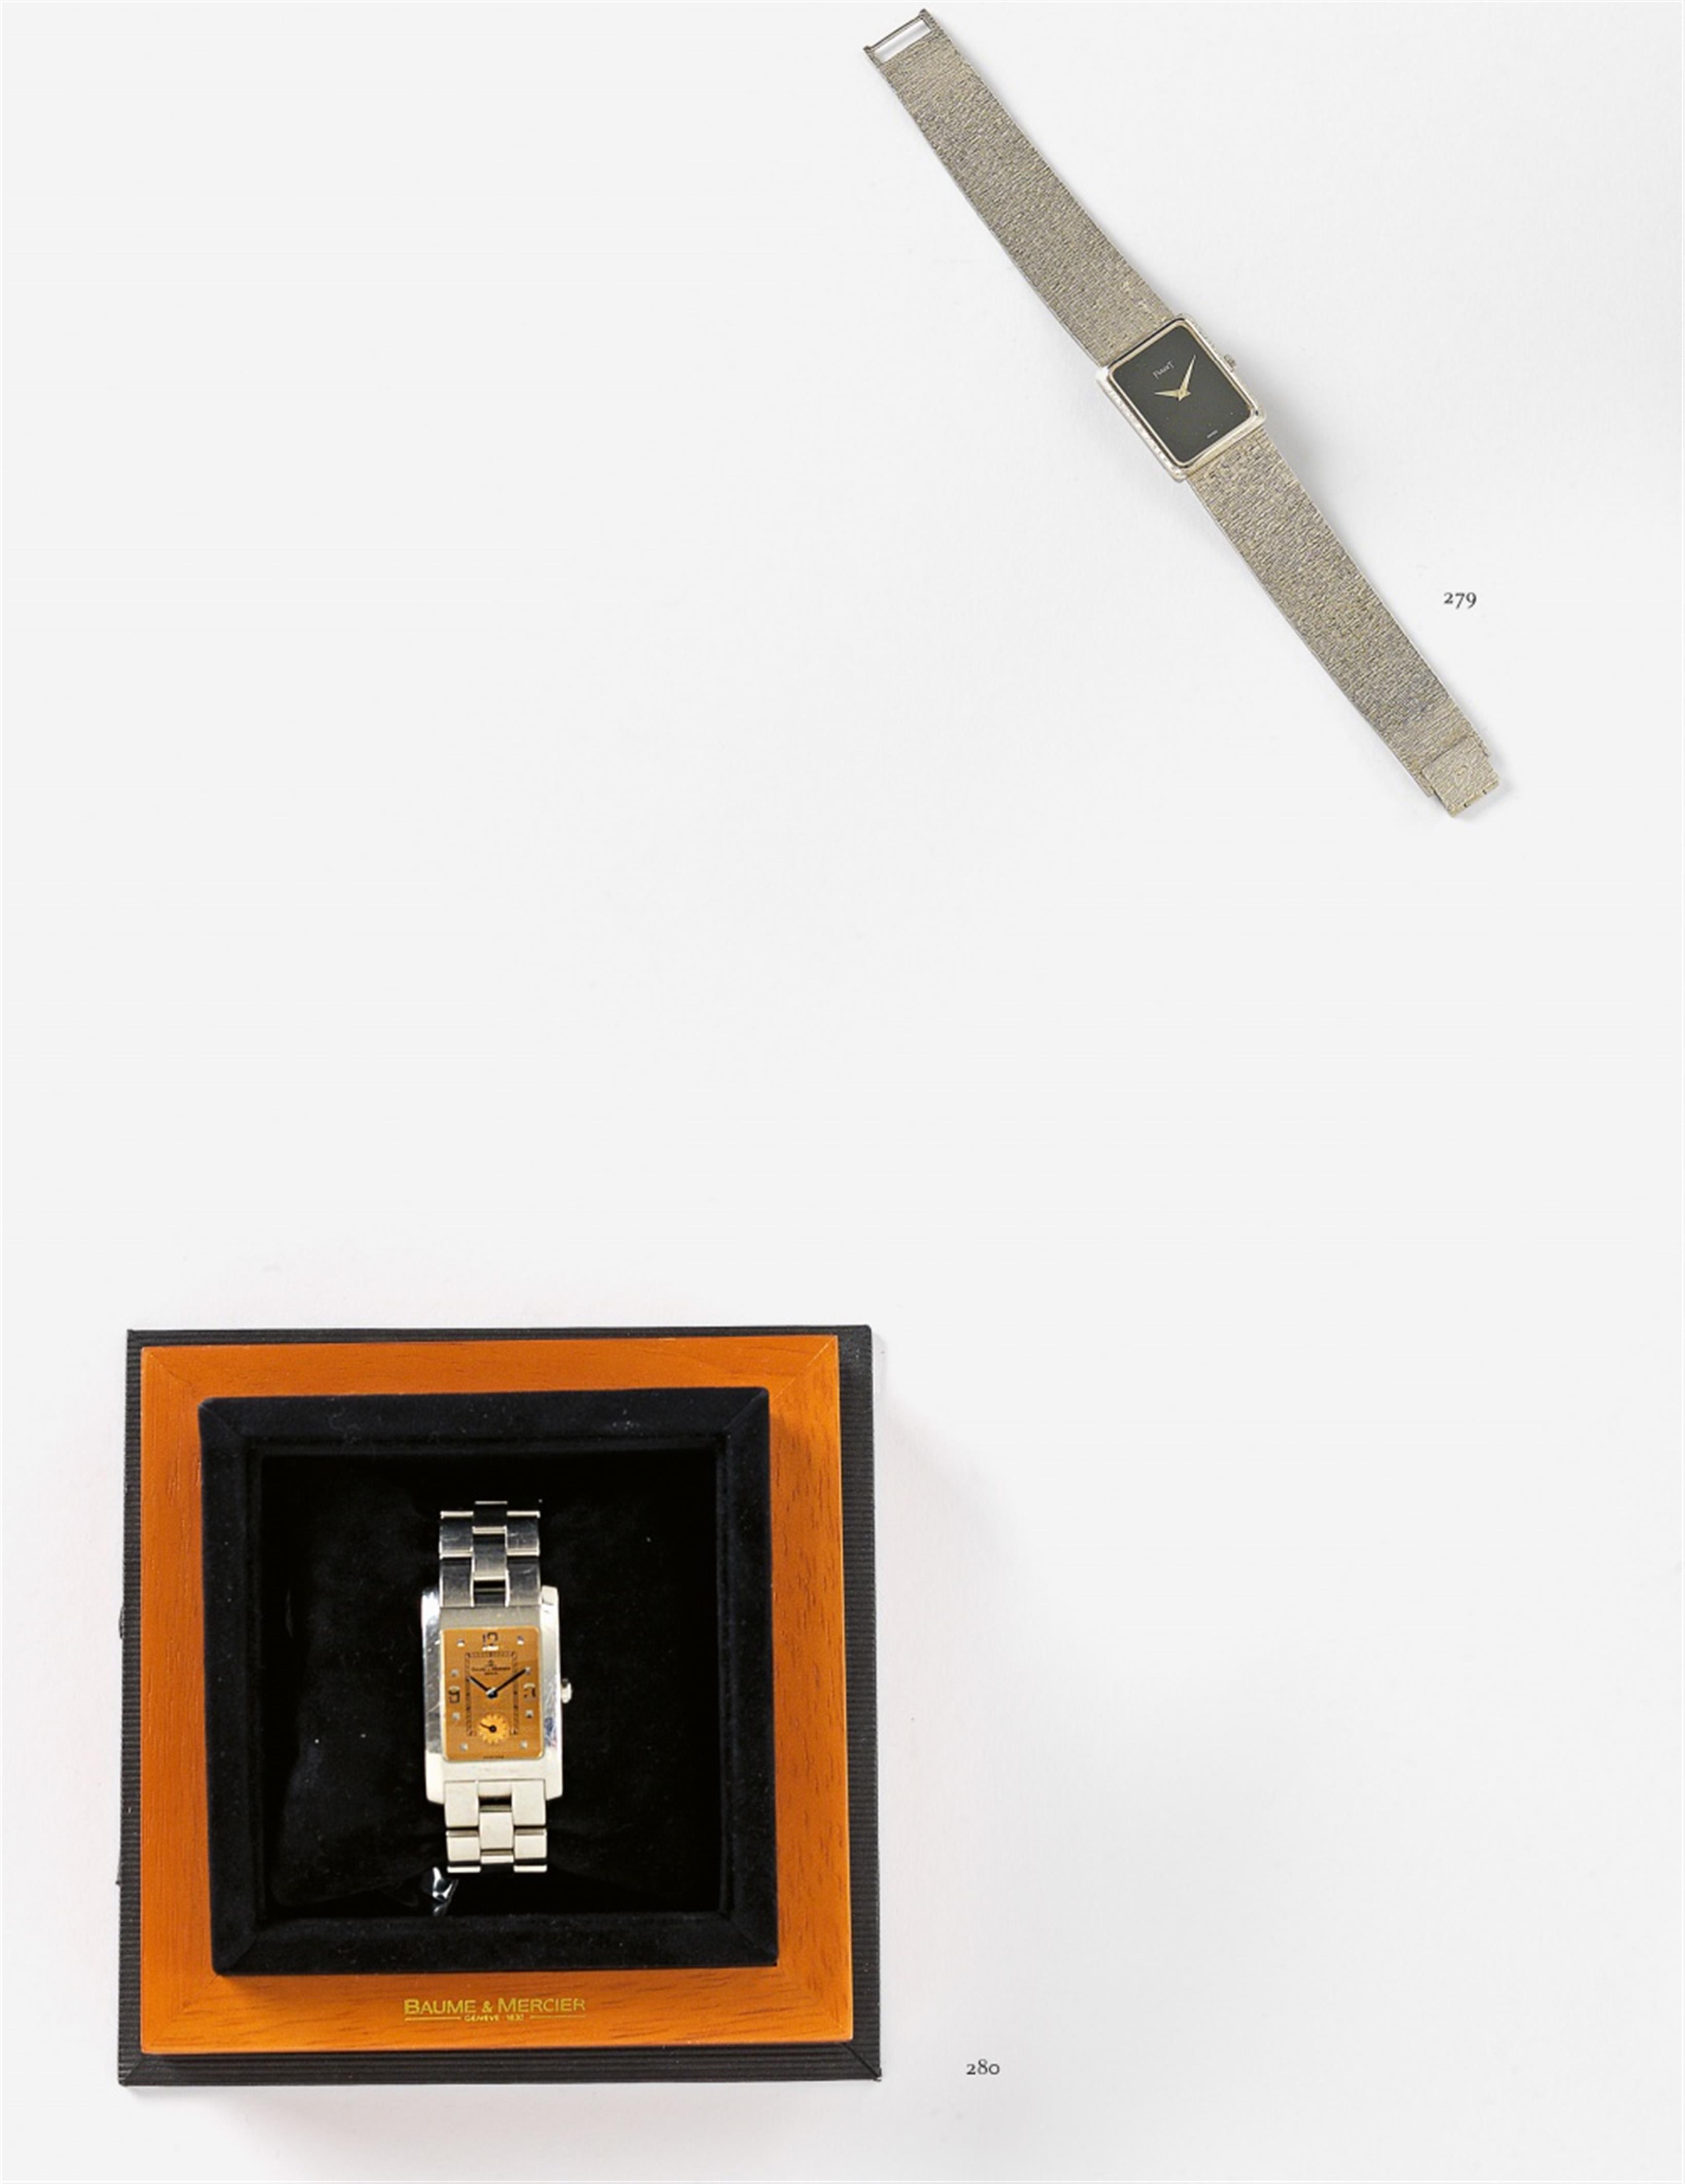 A Baume & Mercier gentlemen's wristwatch - image-1